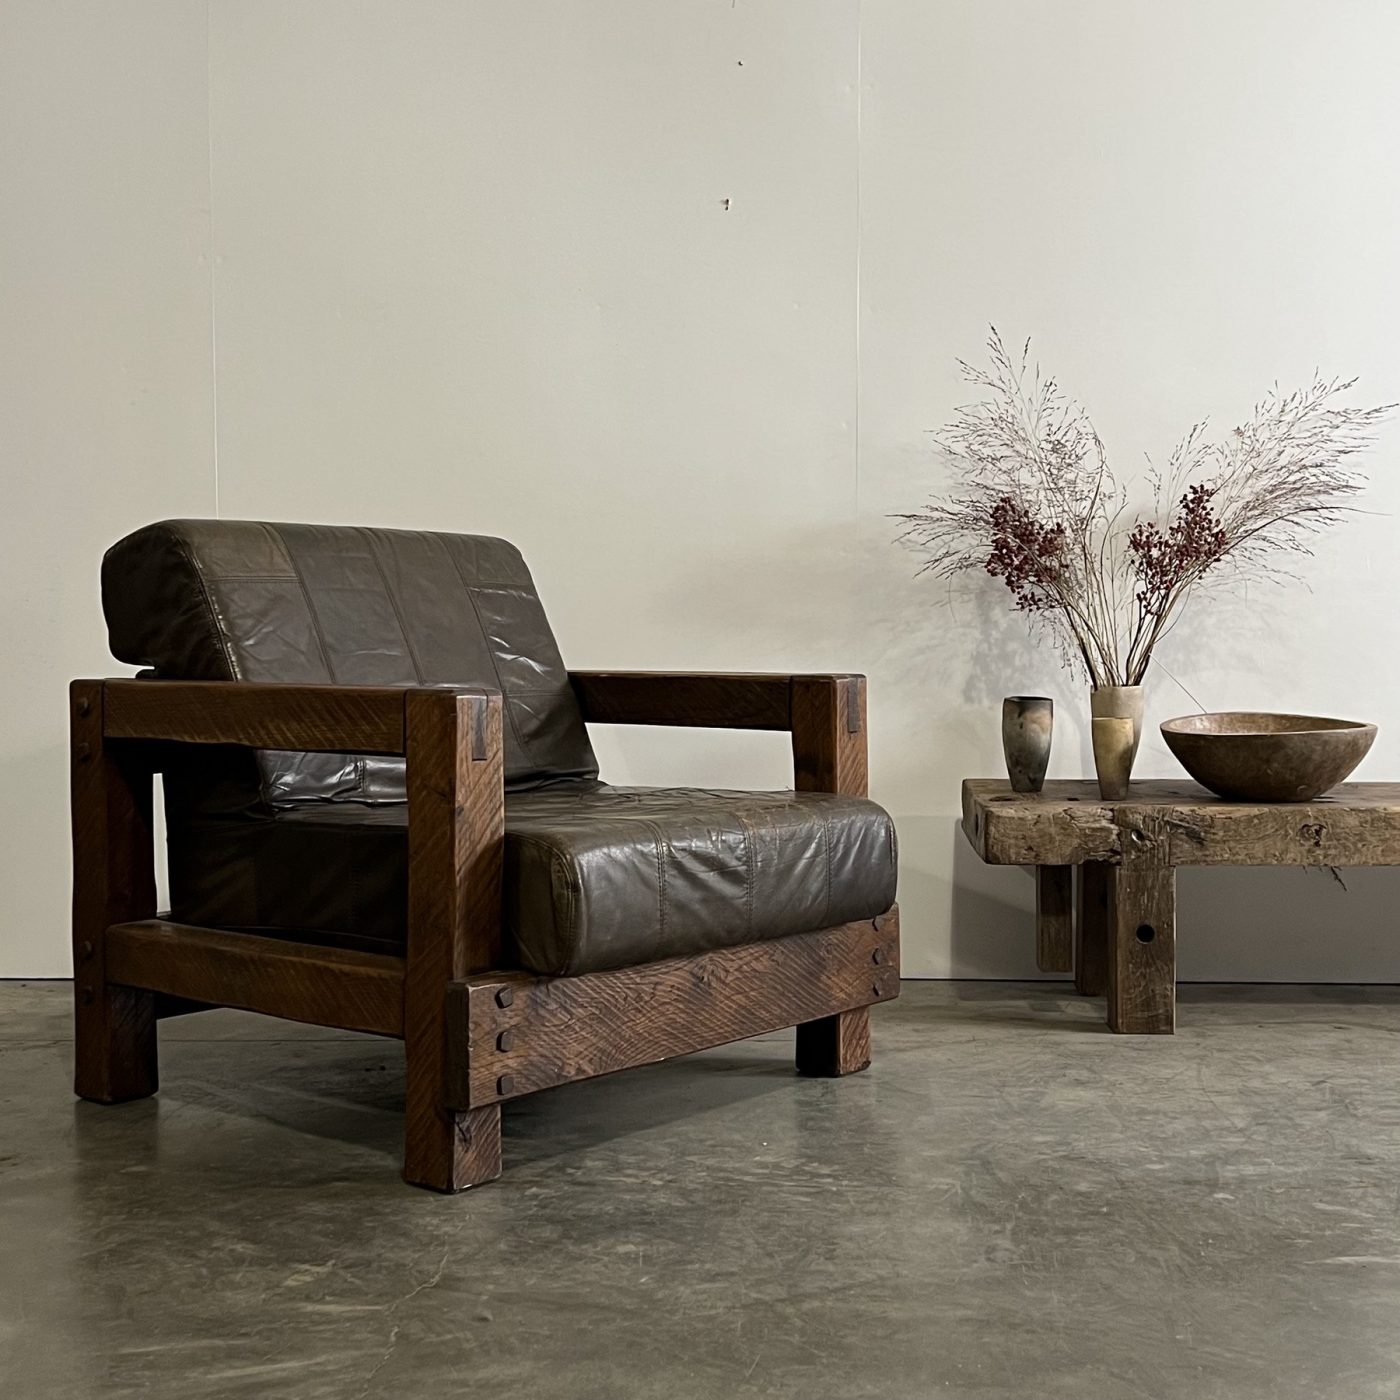 objet-vagabond-leather-armchair0002